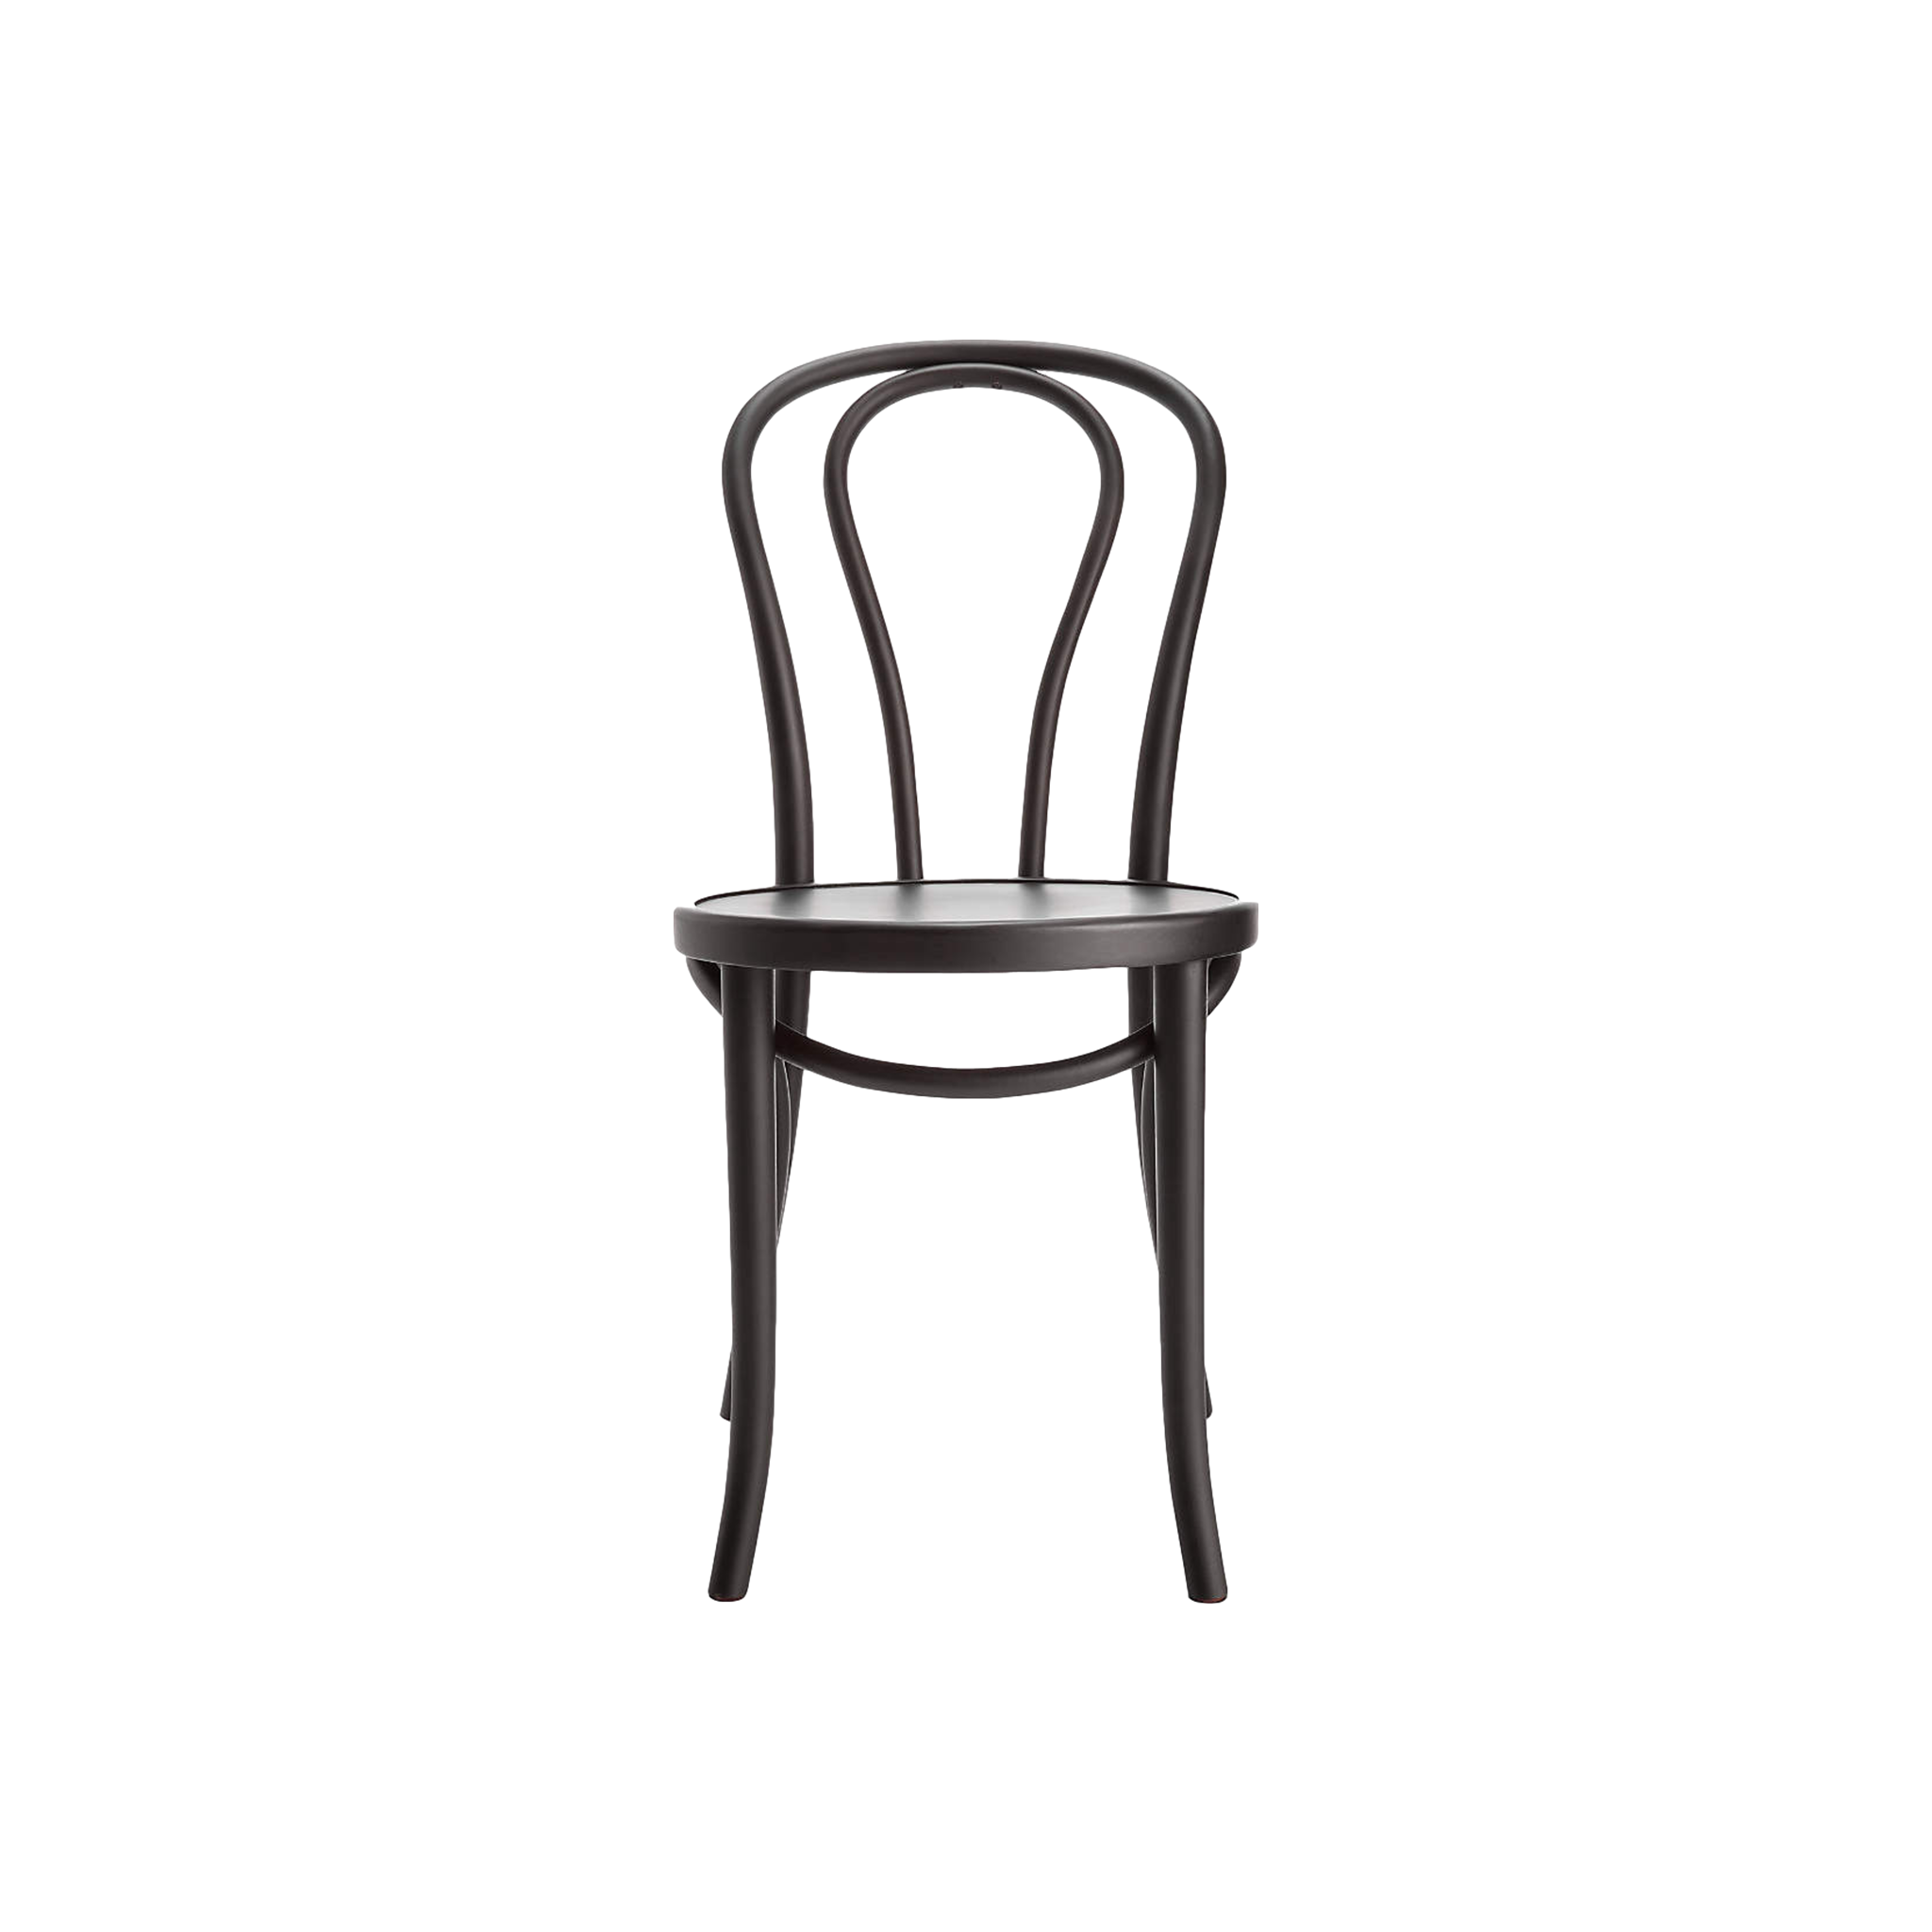 Mercato Chair